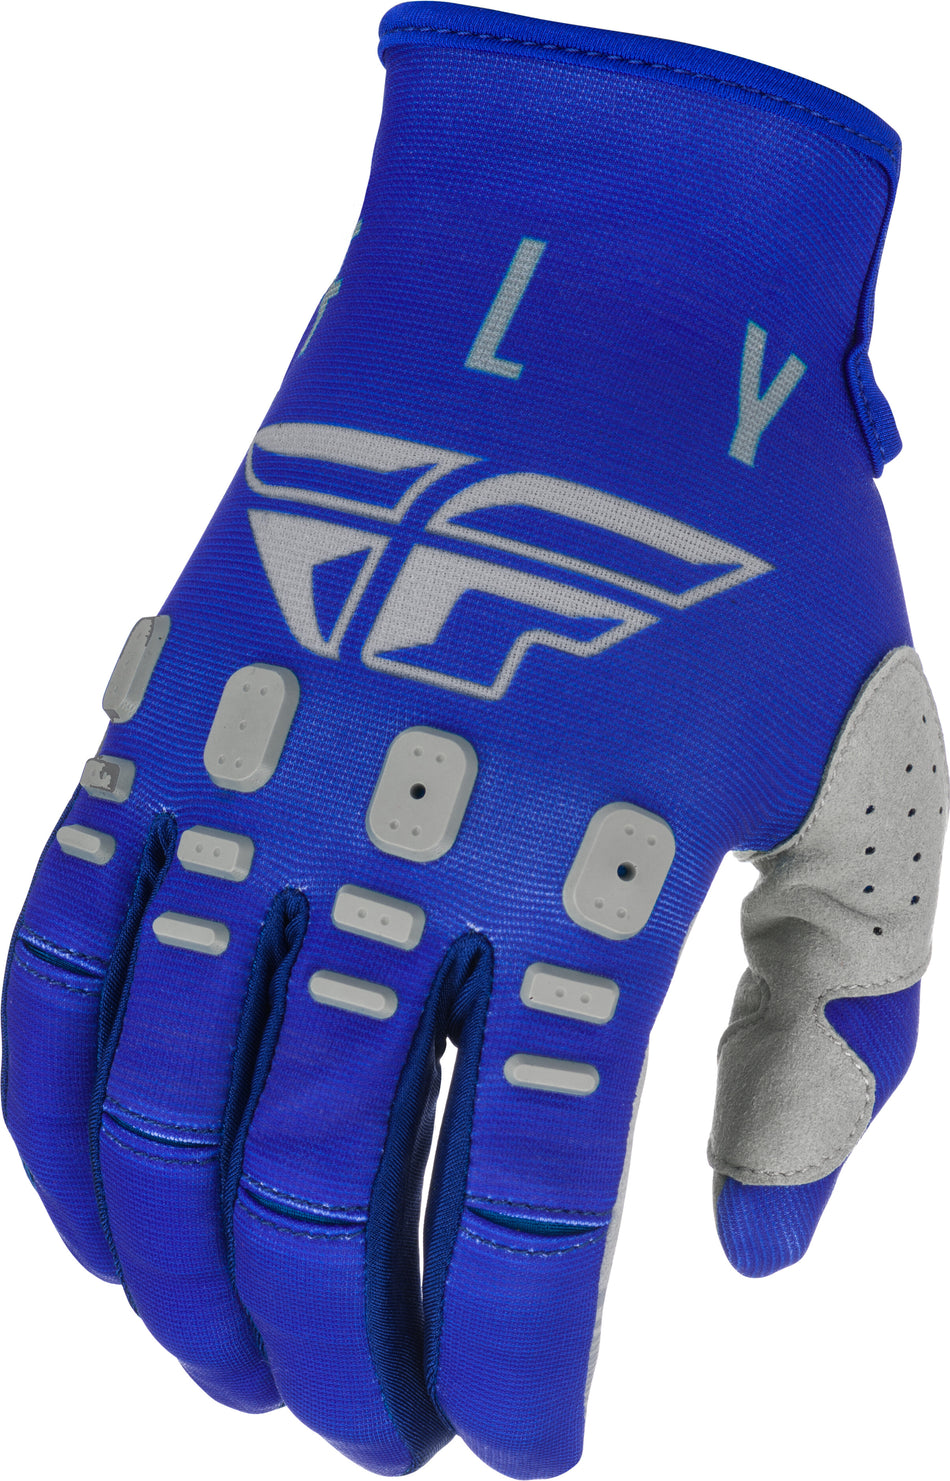 FLY RACING Kinetic K121 Gloves Blue/Navy/Grey Sz 09 374-41109